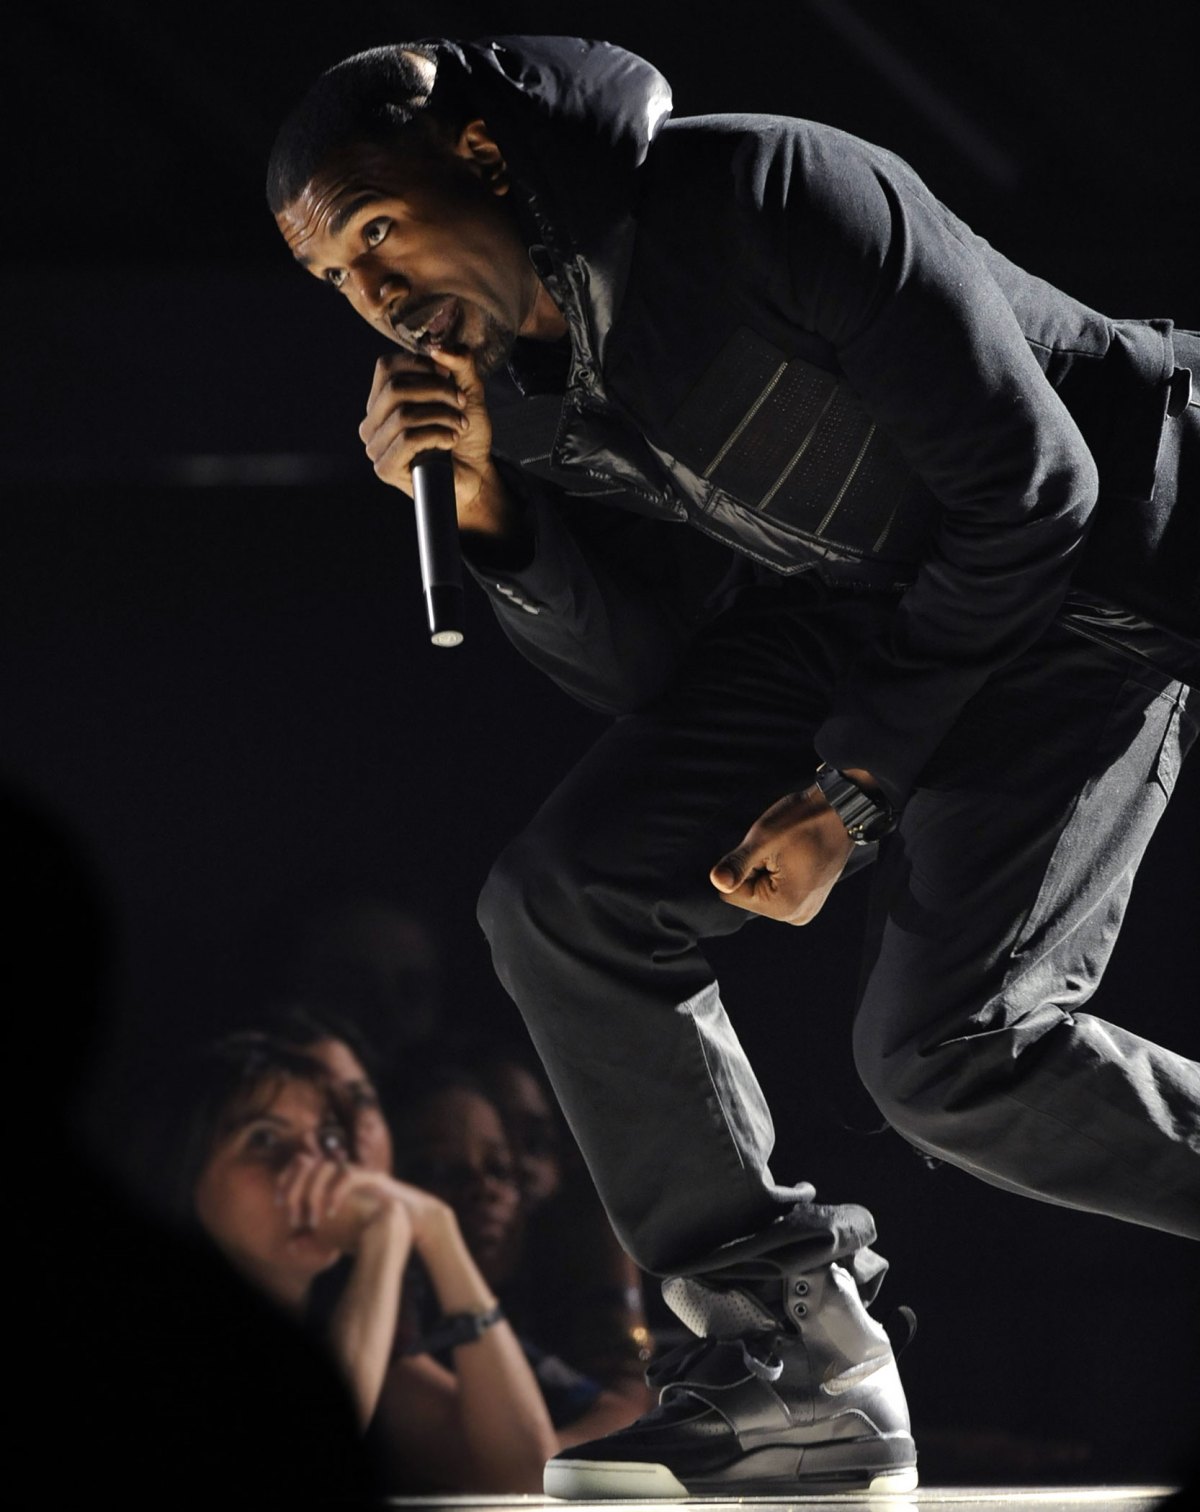 Nike Air Yeezy - Sneakers by Kanye West 